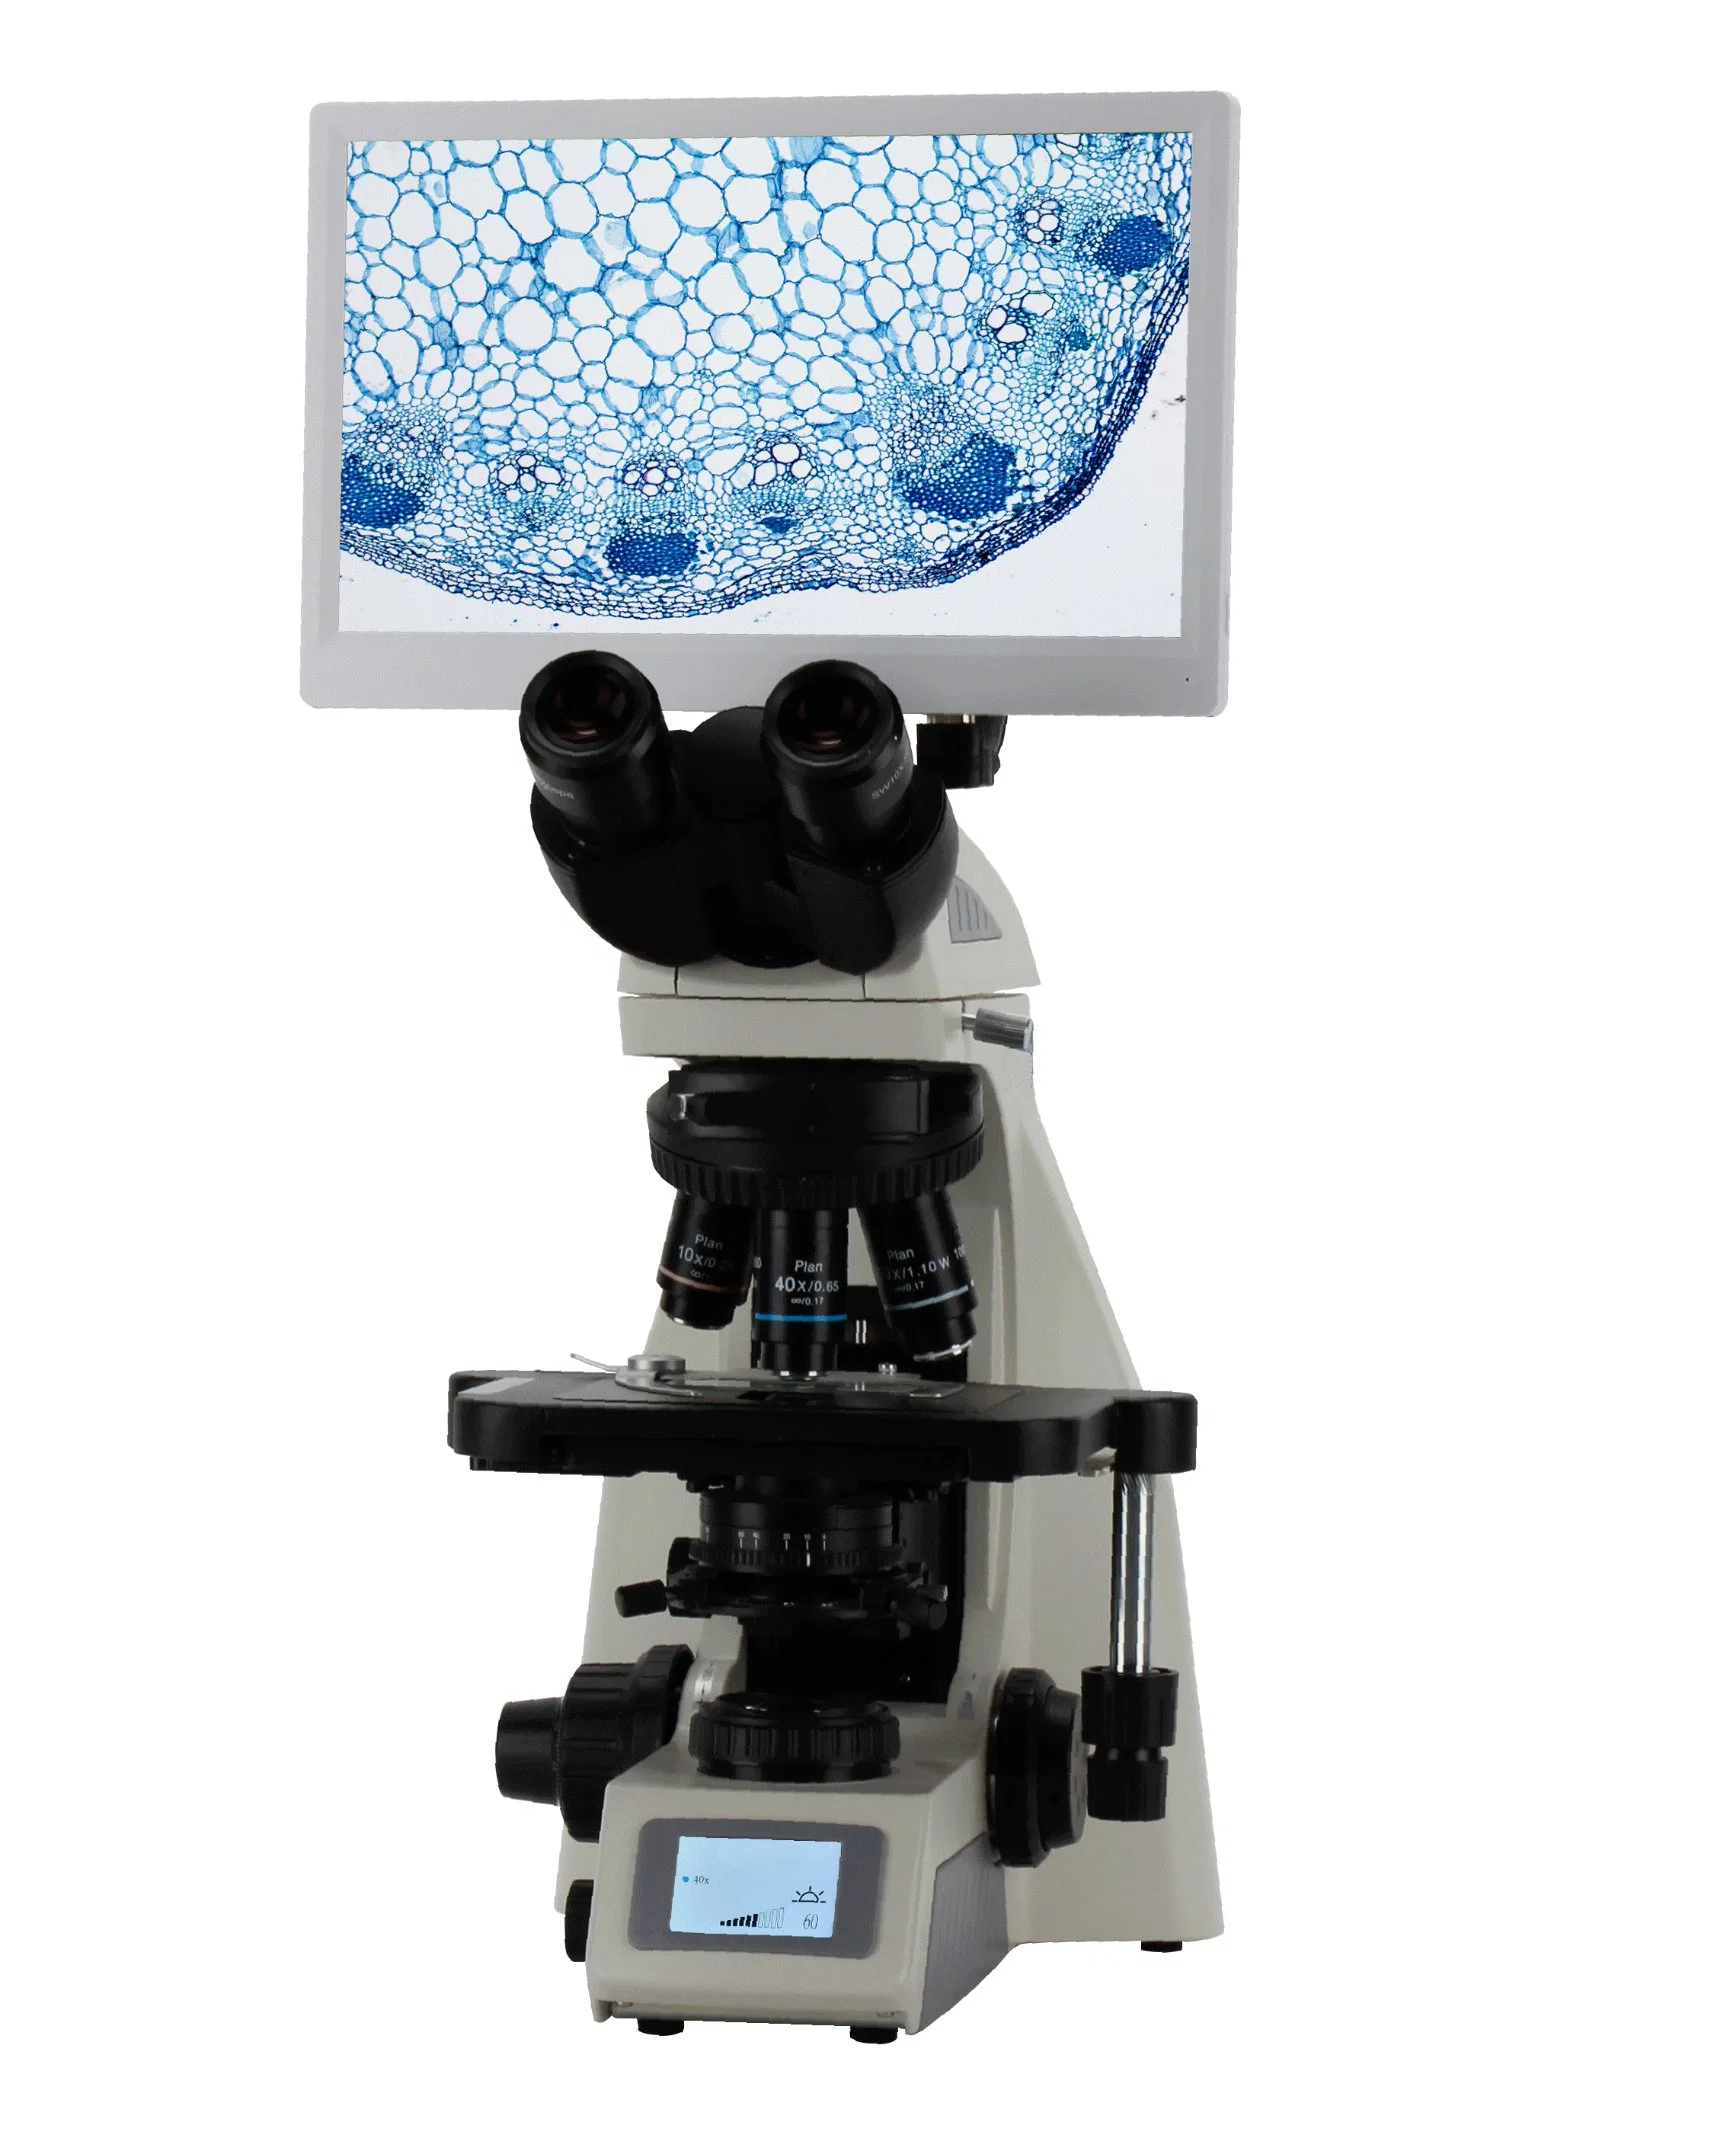 Bestscope Blm2-274 LCD Digital Biological Microscope mit 6MP Kamera und 1080P HD LCD-BILDSCHIRM